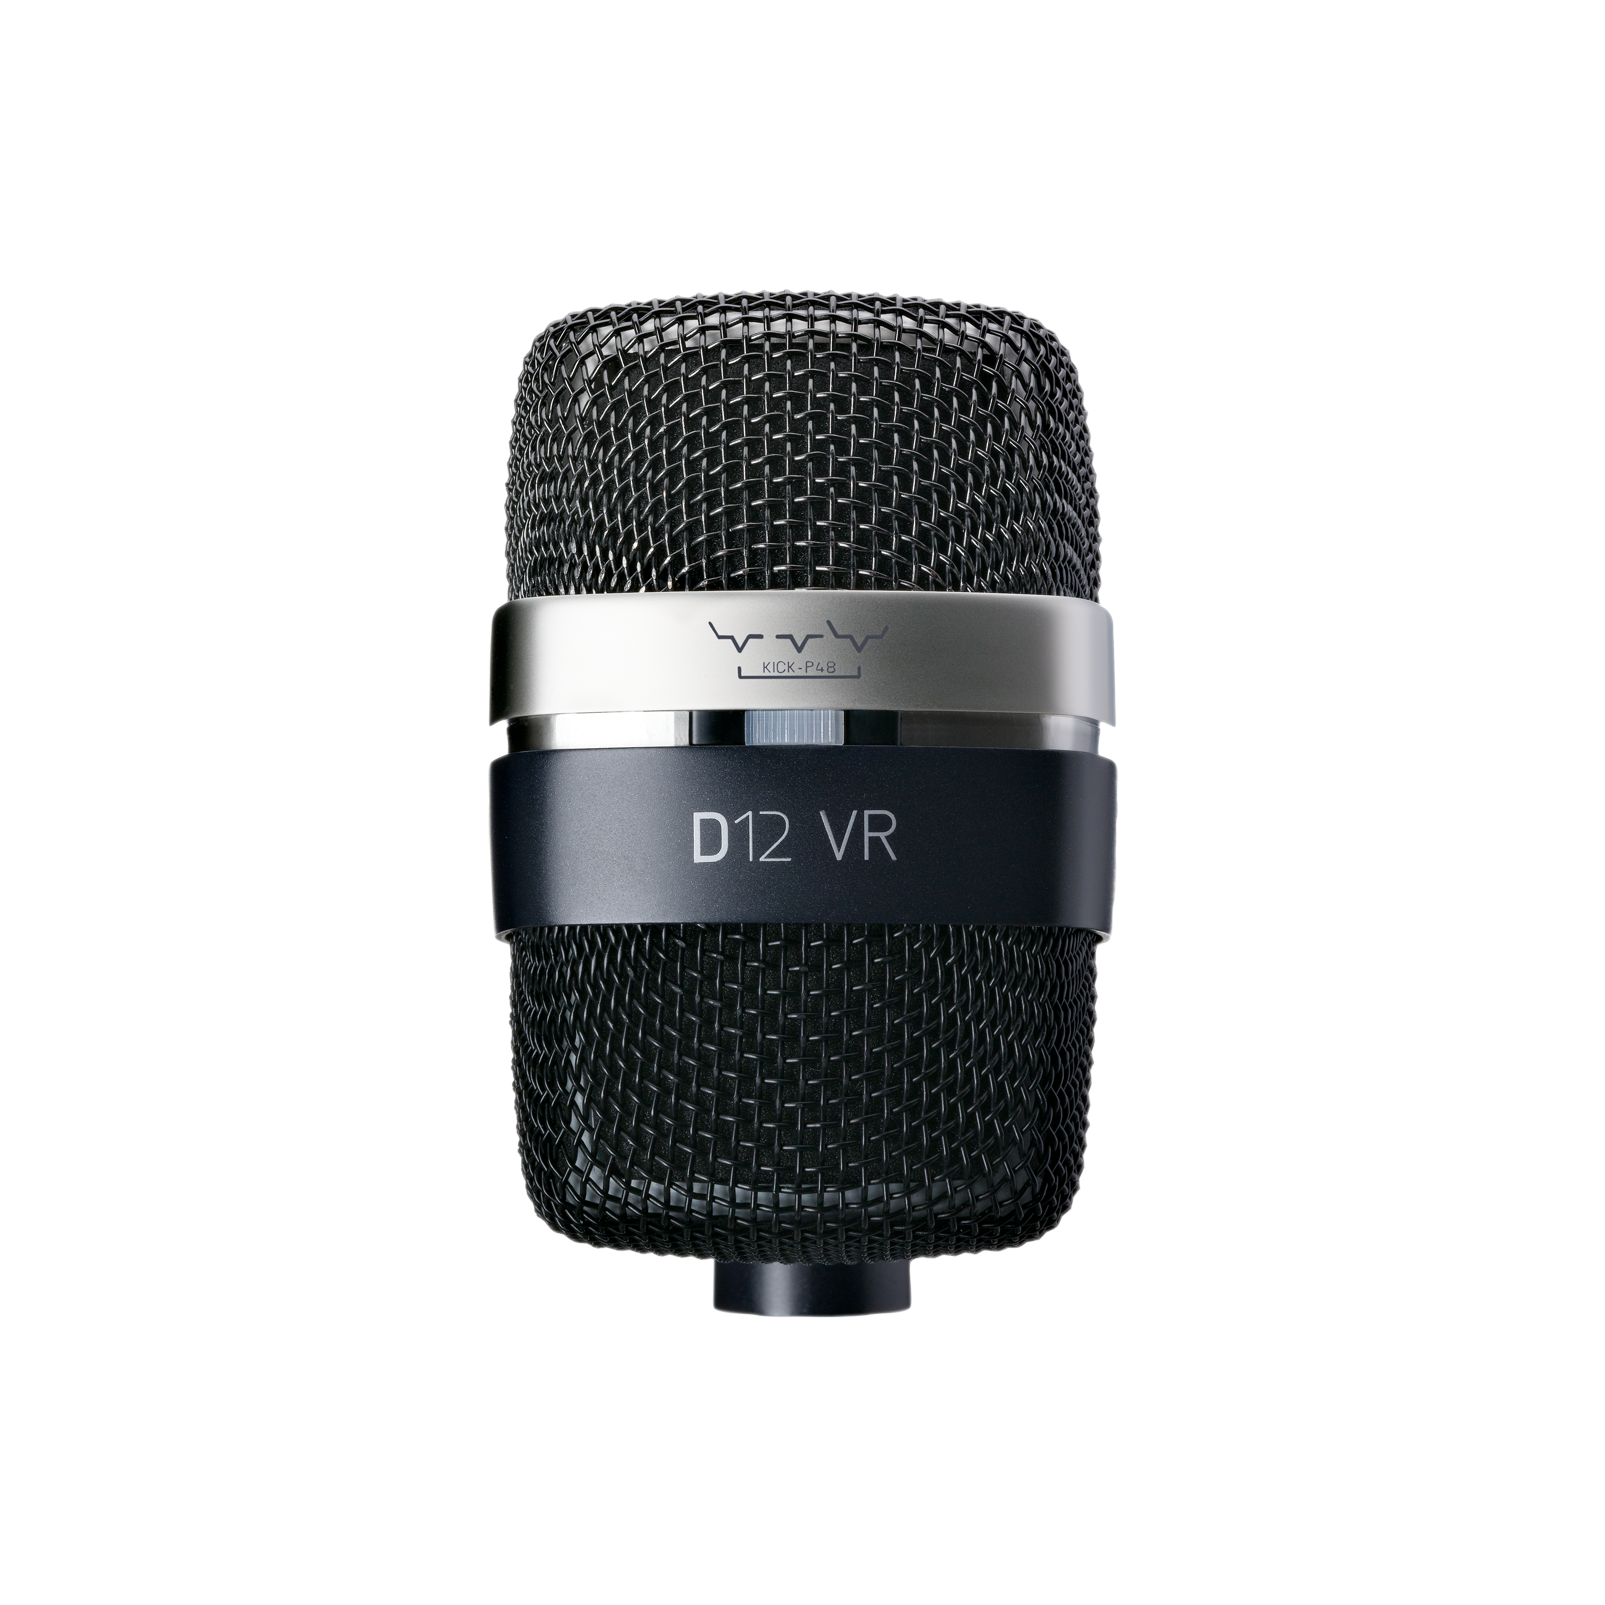 D12 VR (B-Stock) - Black - Reference large-diaphragm dynamic microphone - Detailshot 1